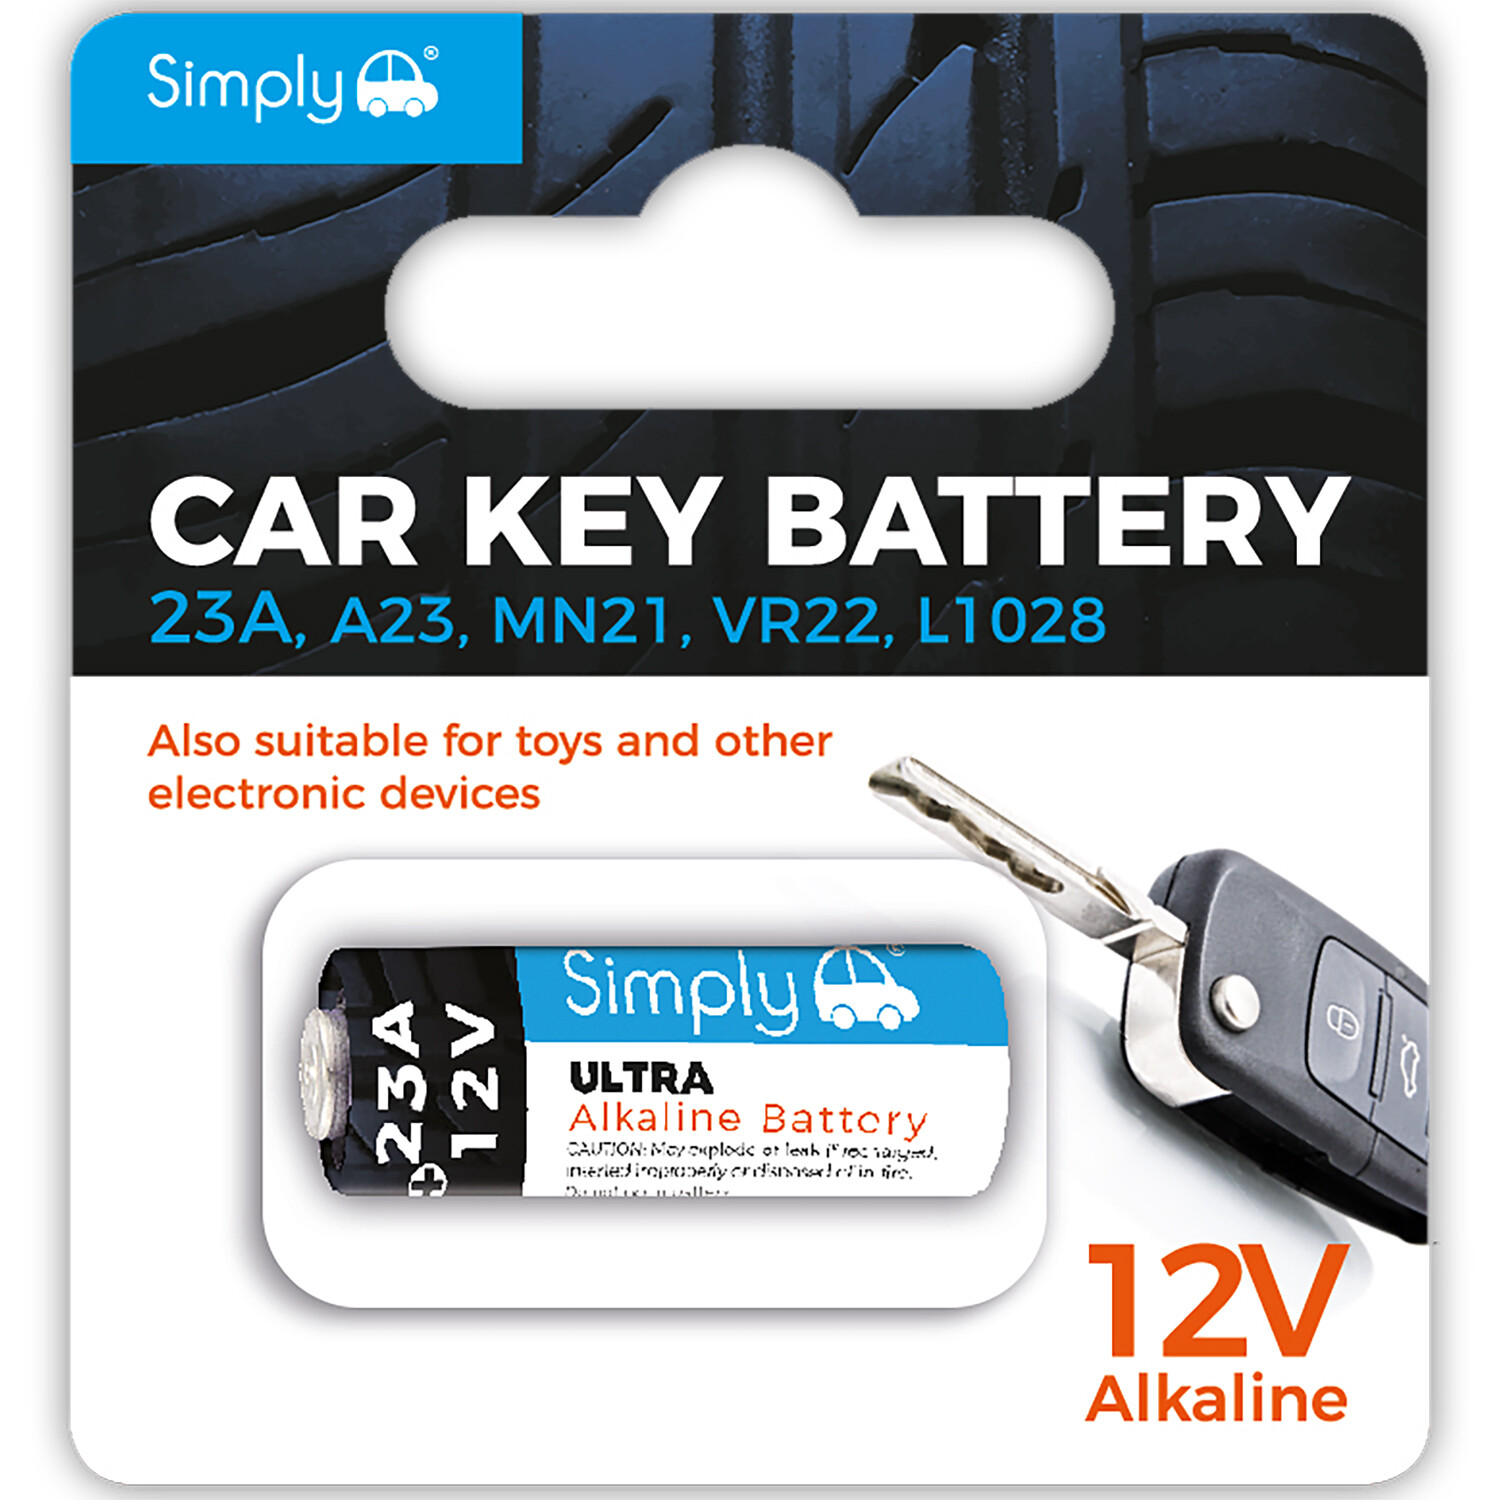 12V Car Key Battery Image